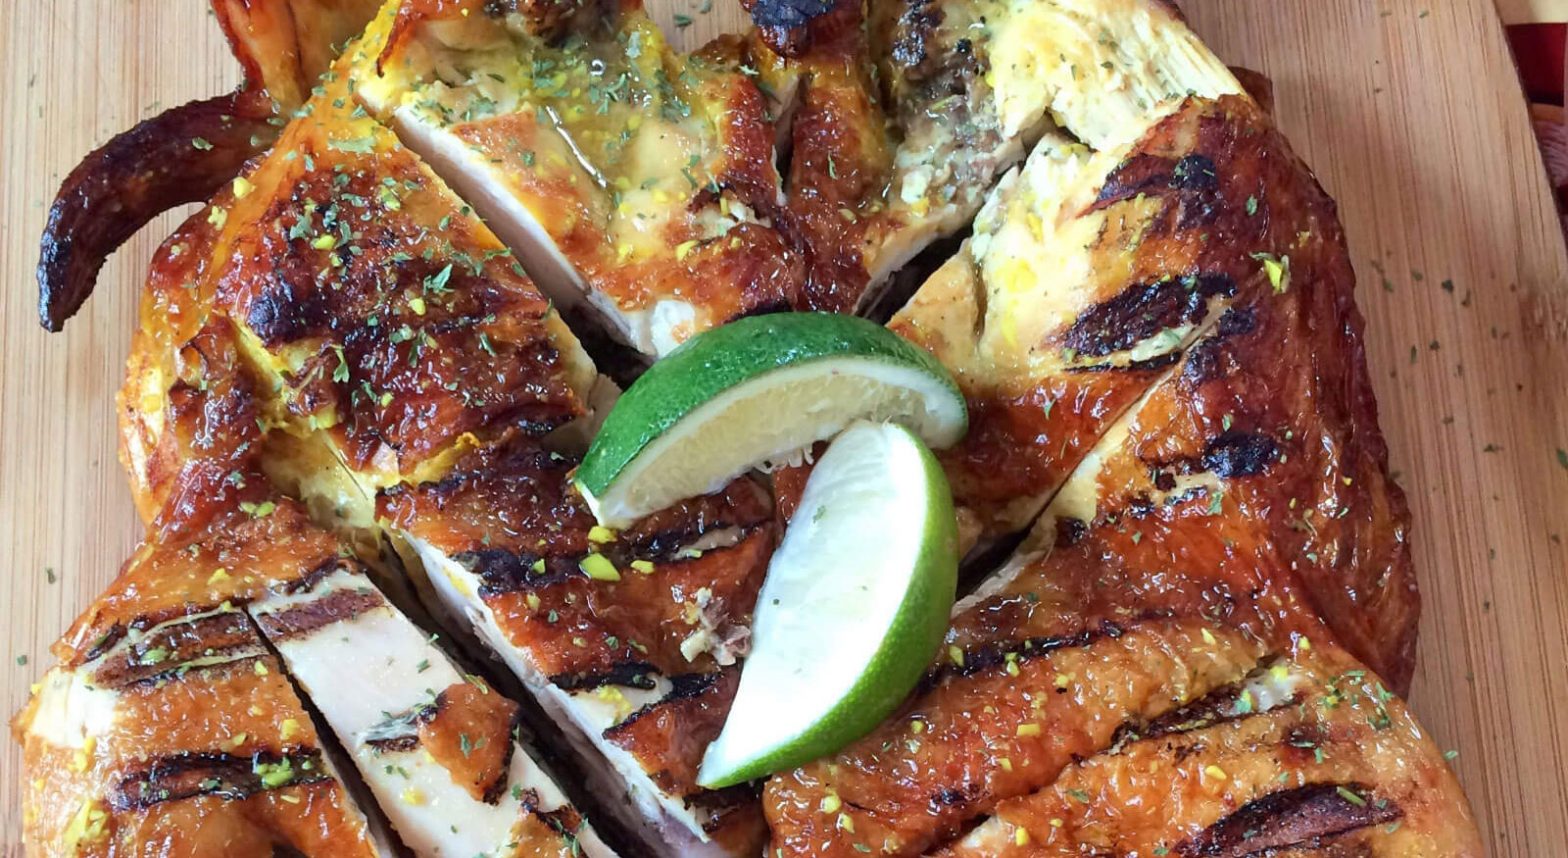 Peri-Peri Cebu offers new way to enjoy grilled chicken